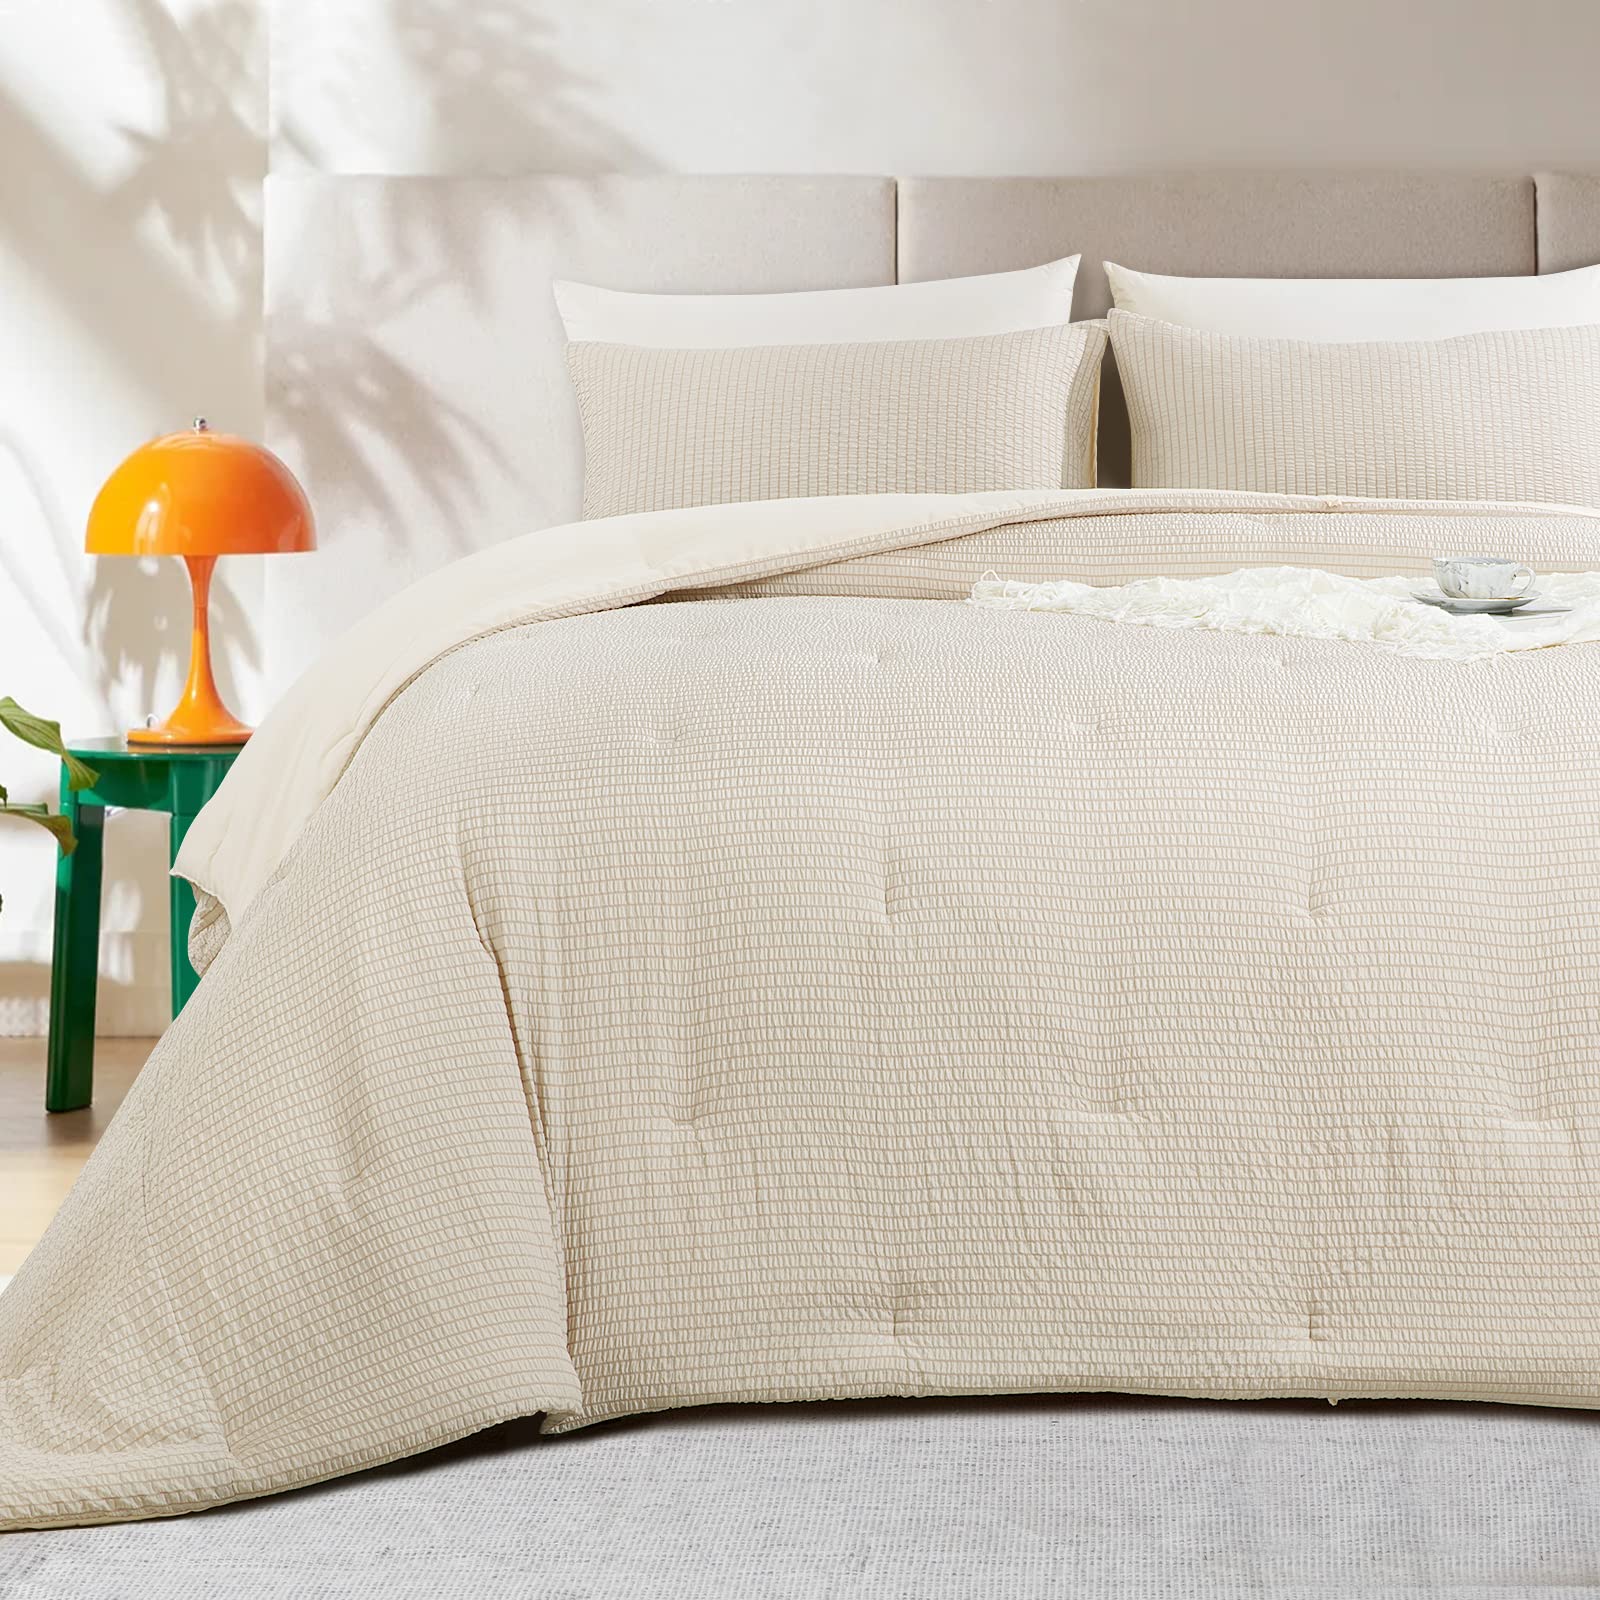 HOMBYS 3 Piece Seersucker Oversized King Comforter Set 120x120, Breathable Beige Soft Comforter Set, Lightweight Down Alternativ